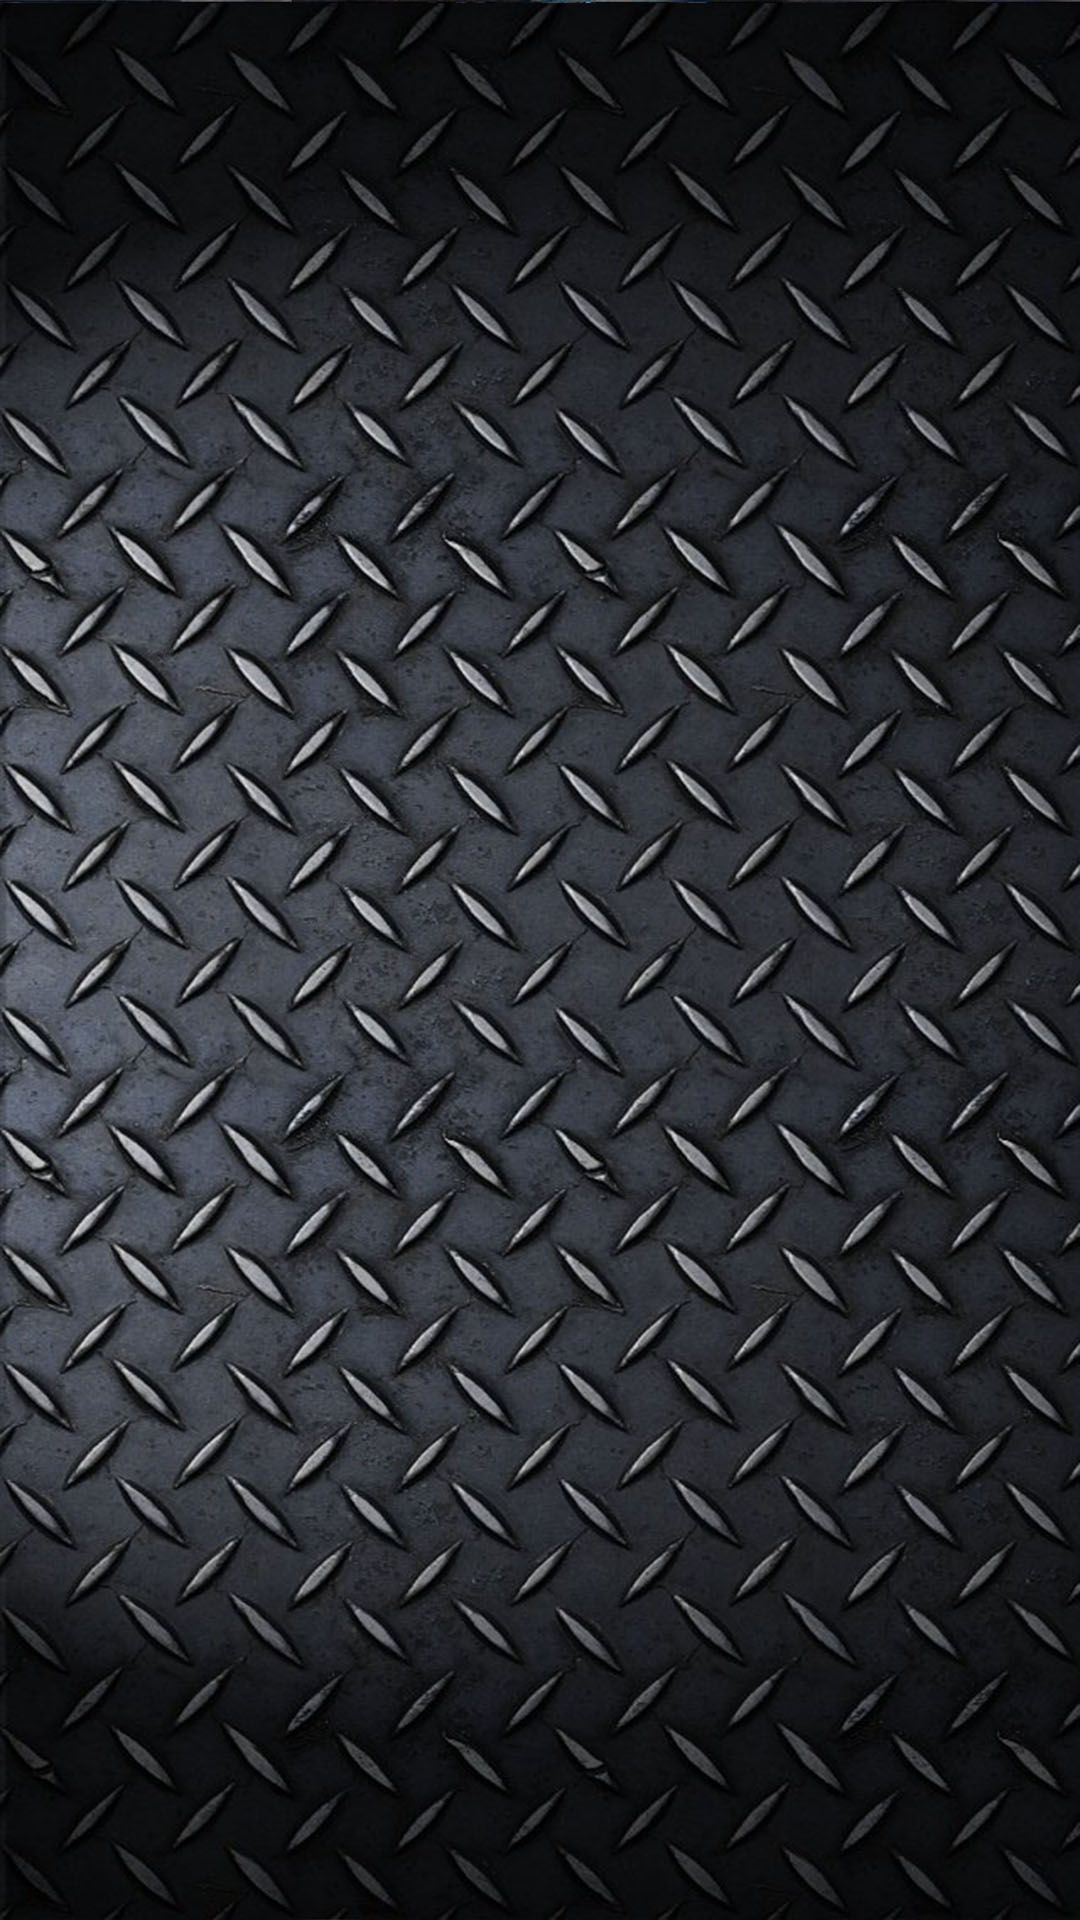 Top Collection Phone and Desktop Wallpaper HD. Black wallpaper, Abstract iphone wallpaper, iPhone 5s wallpaper